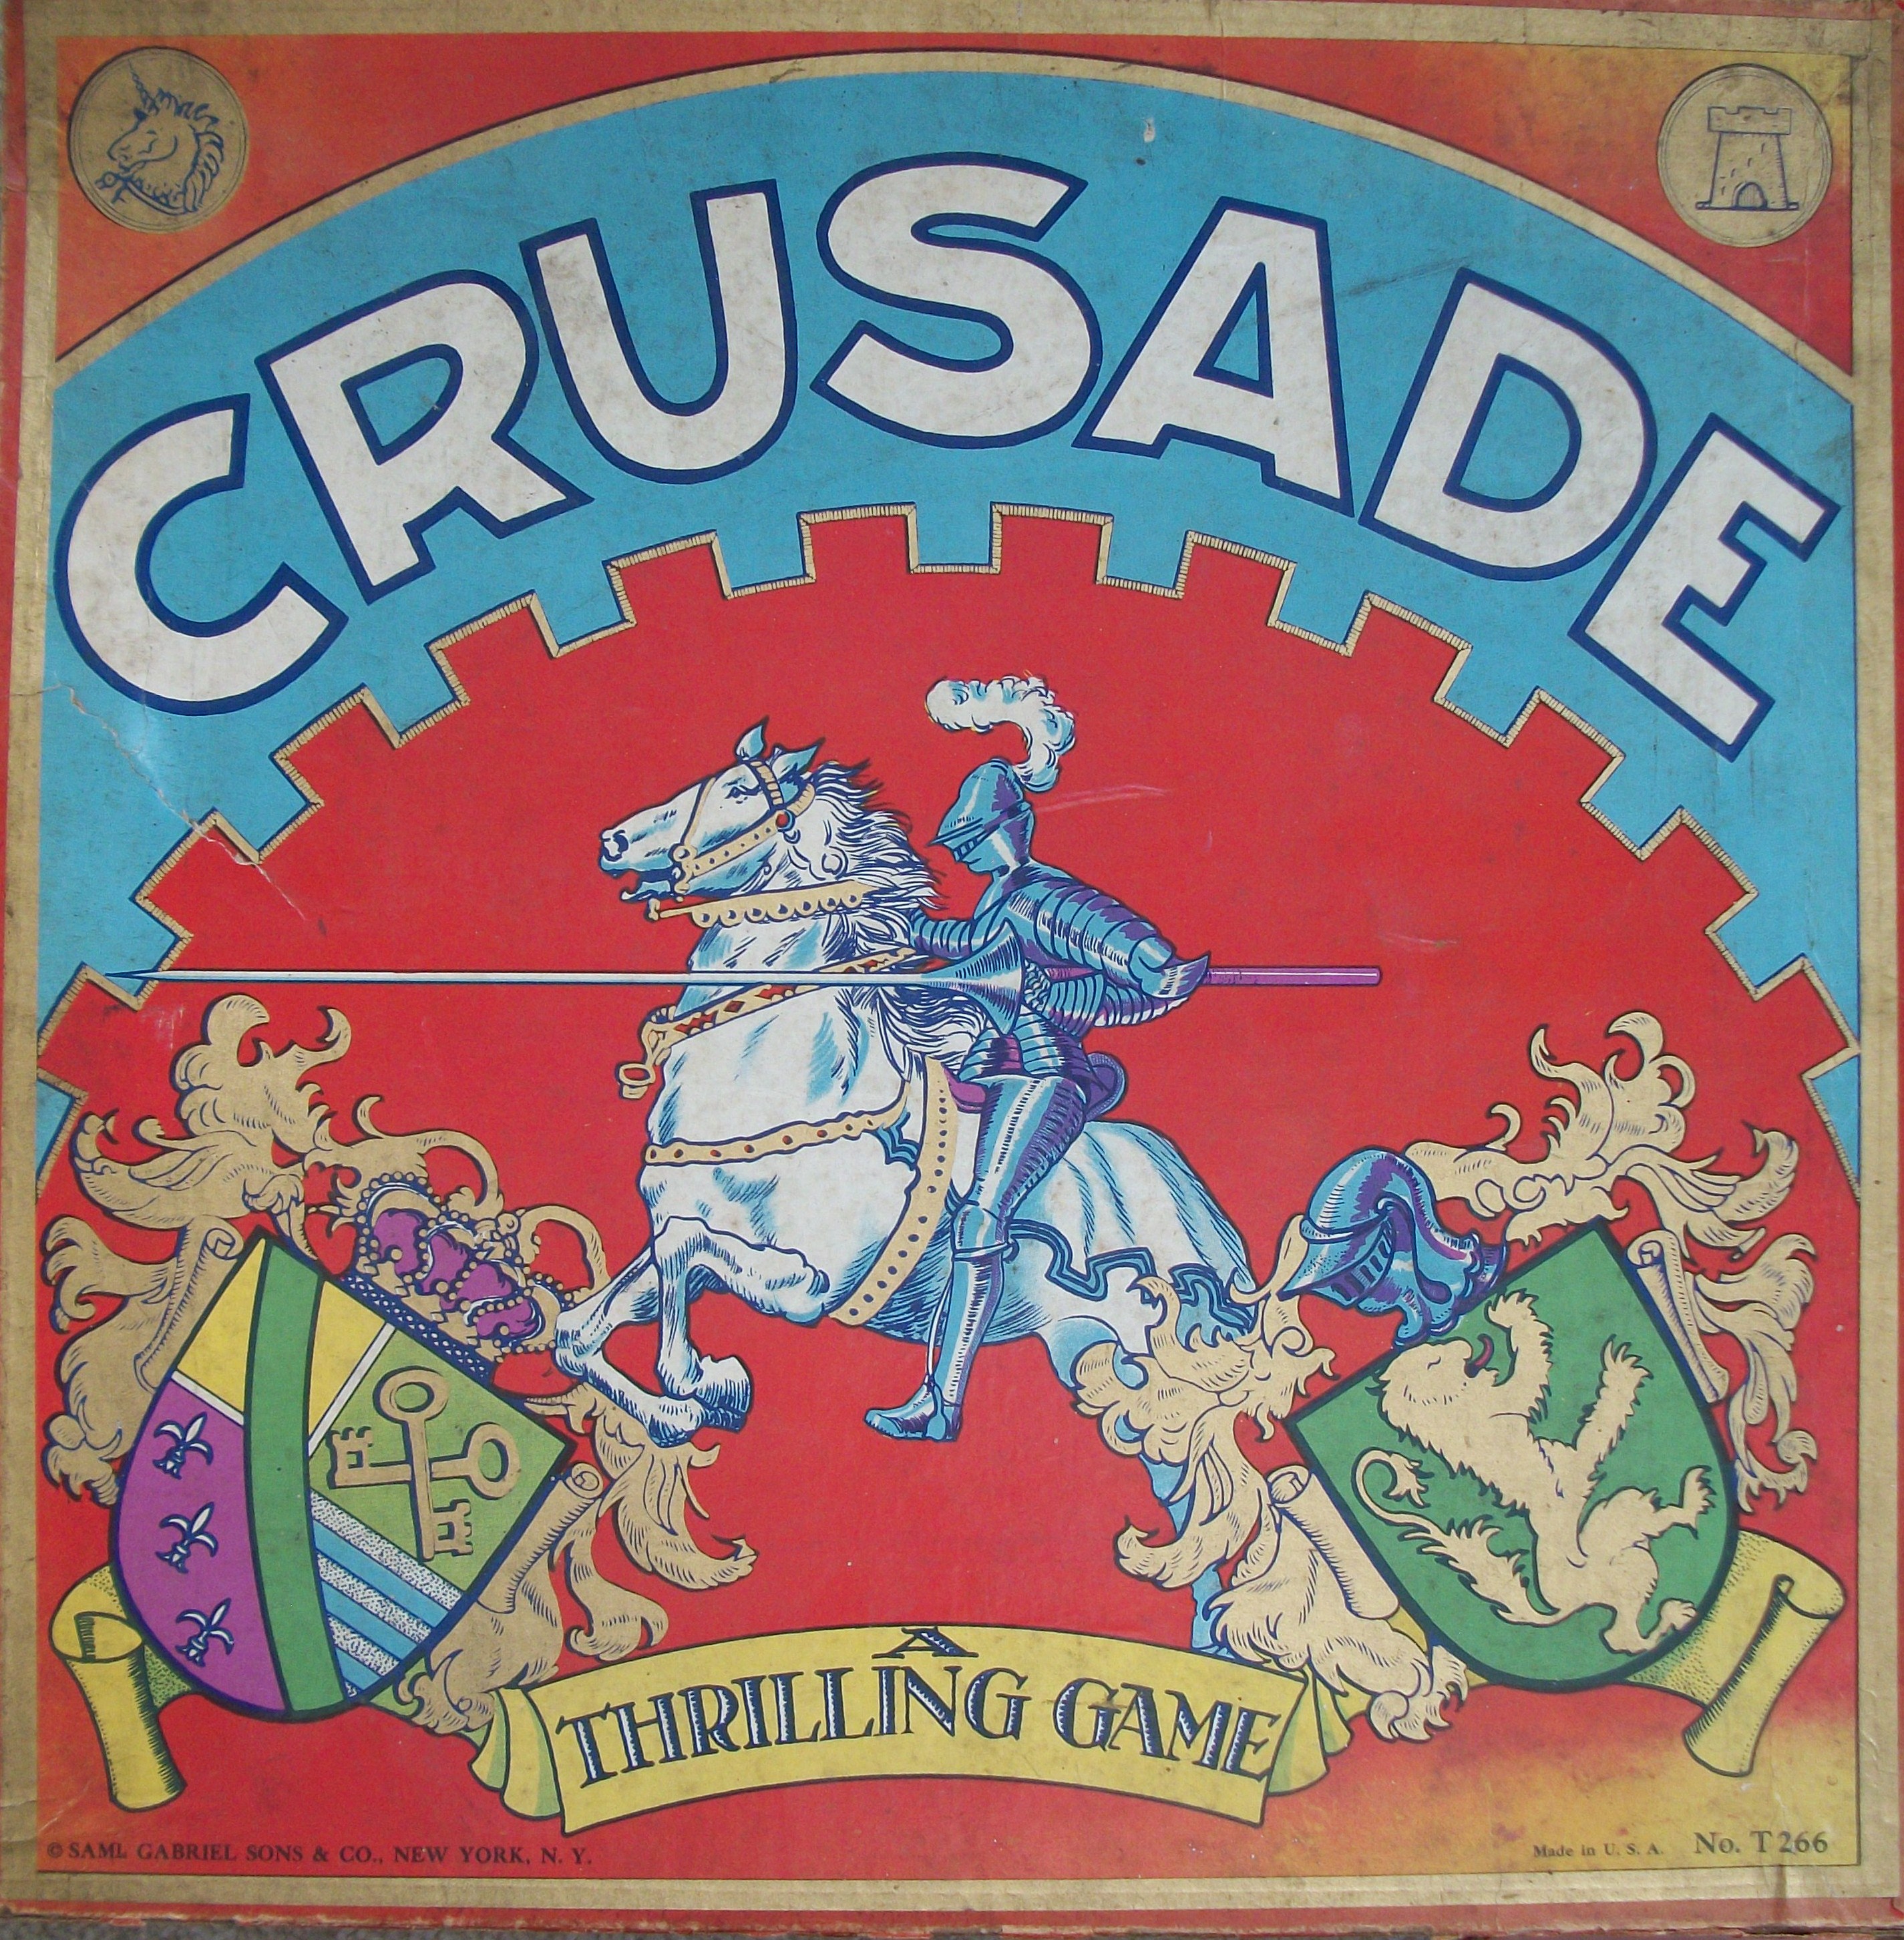 Crusade: 1923 Vintage Game by Samuel Gabriel Sons & Company